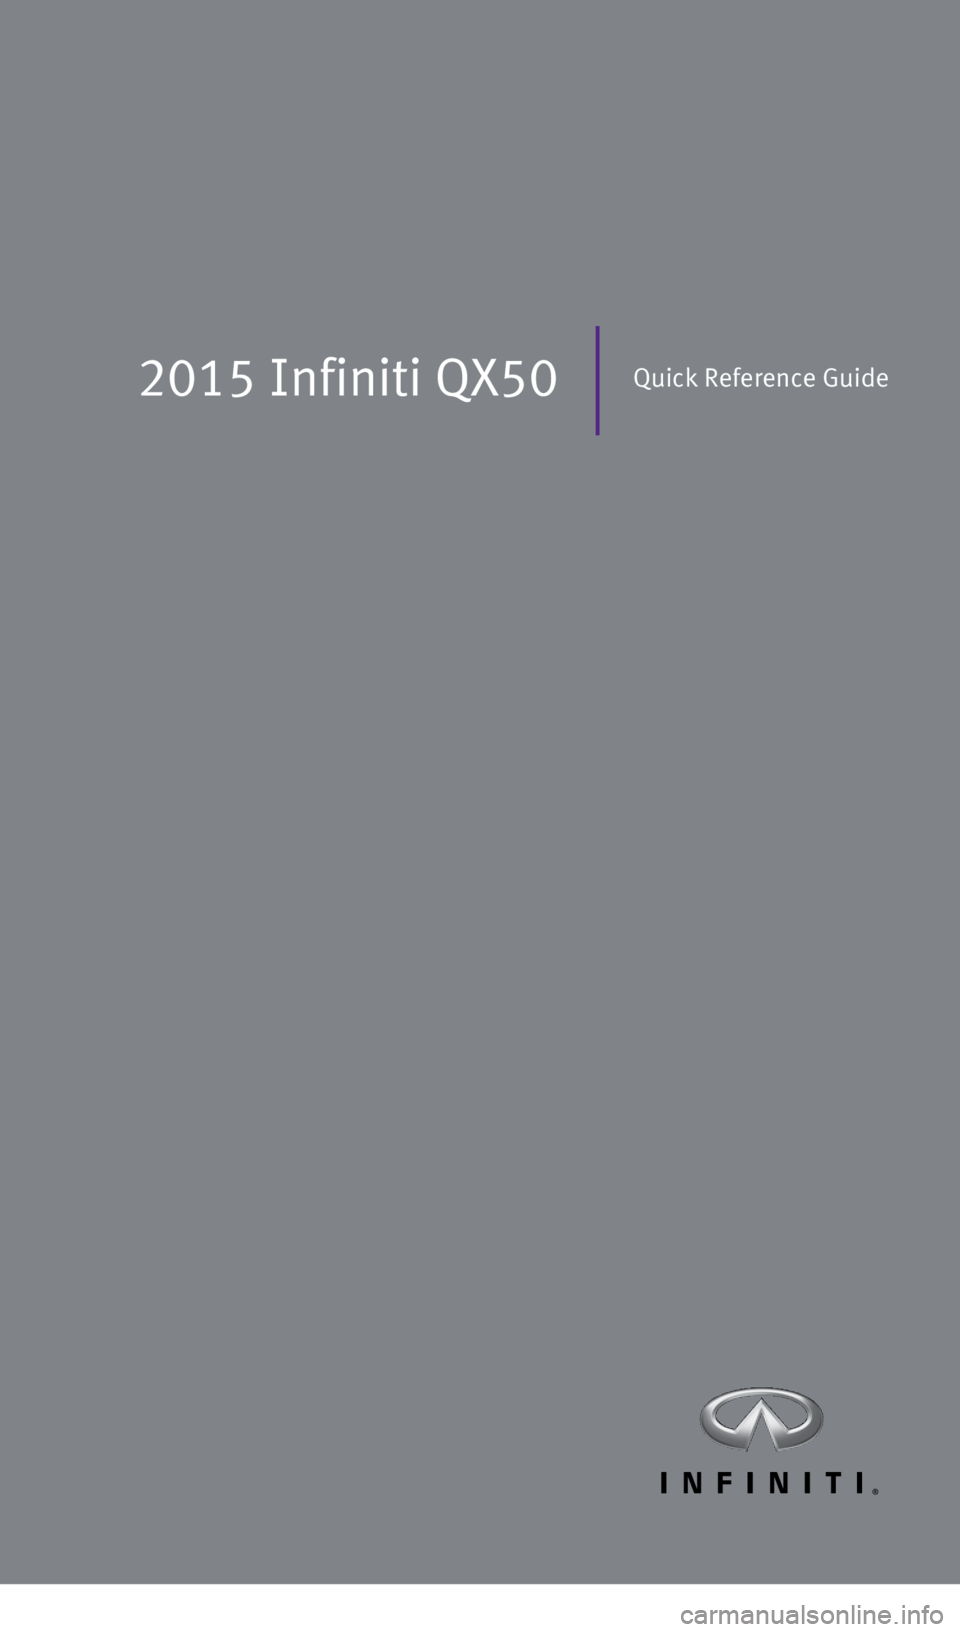 INFINITI QX50 2015  Quick Reference Guide 2015 Infiniti QX50Quick Reference Guide
1923534_15c_Infiniti_QX50_QRG_122314.indd   212/23/14   1:04 PM 